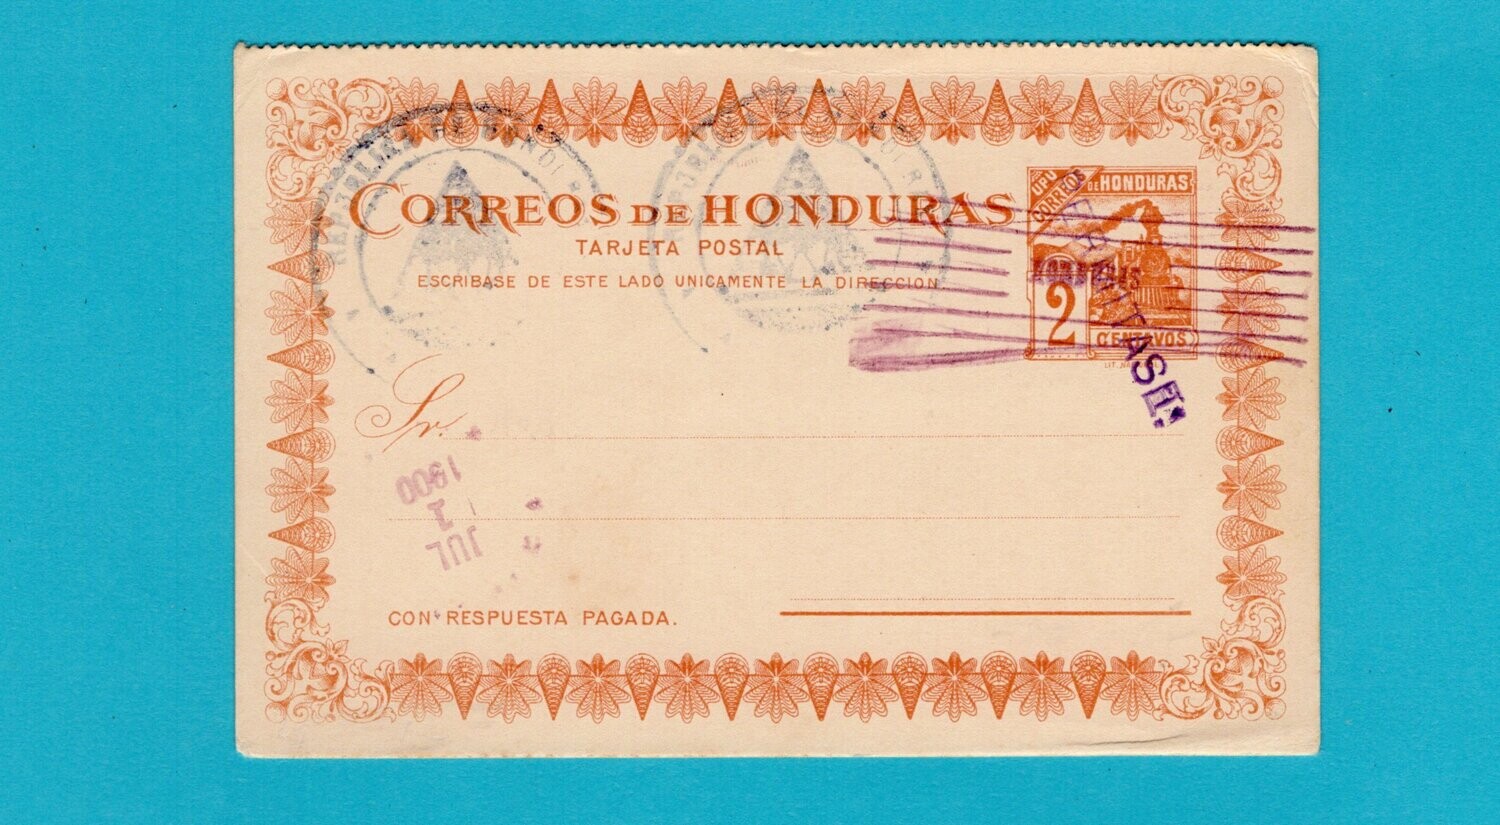 HONDURAS postal card 1900 with "permitase" overprint